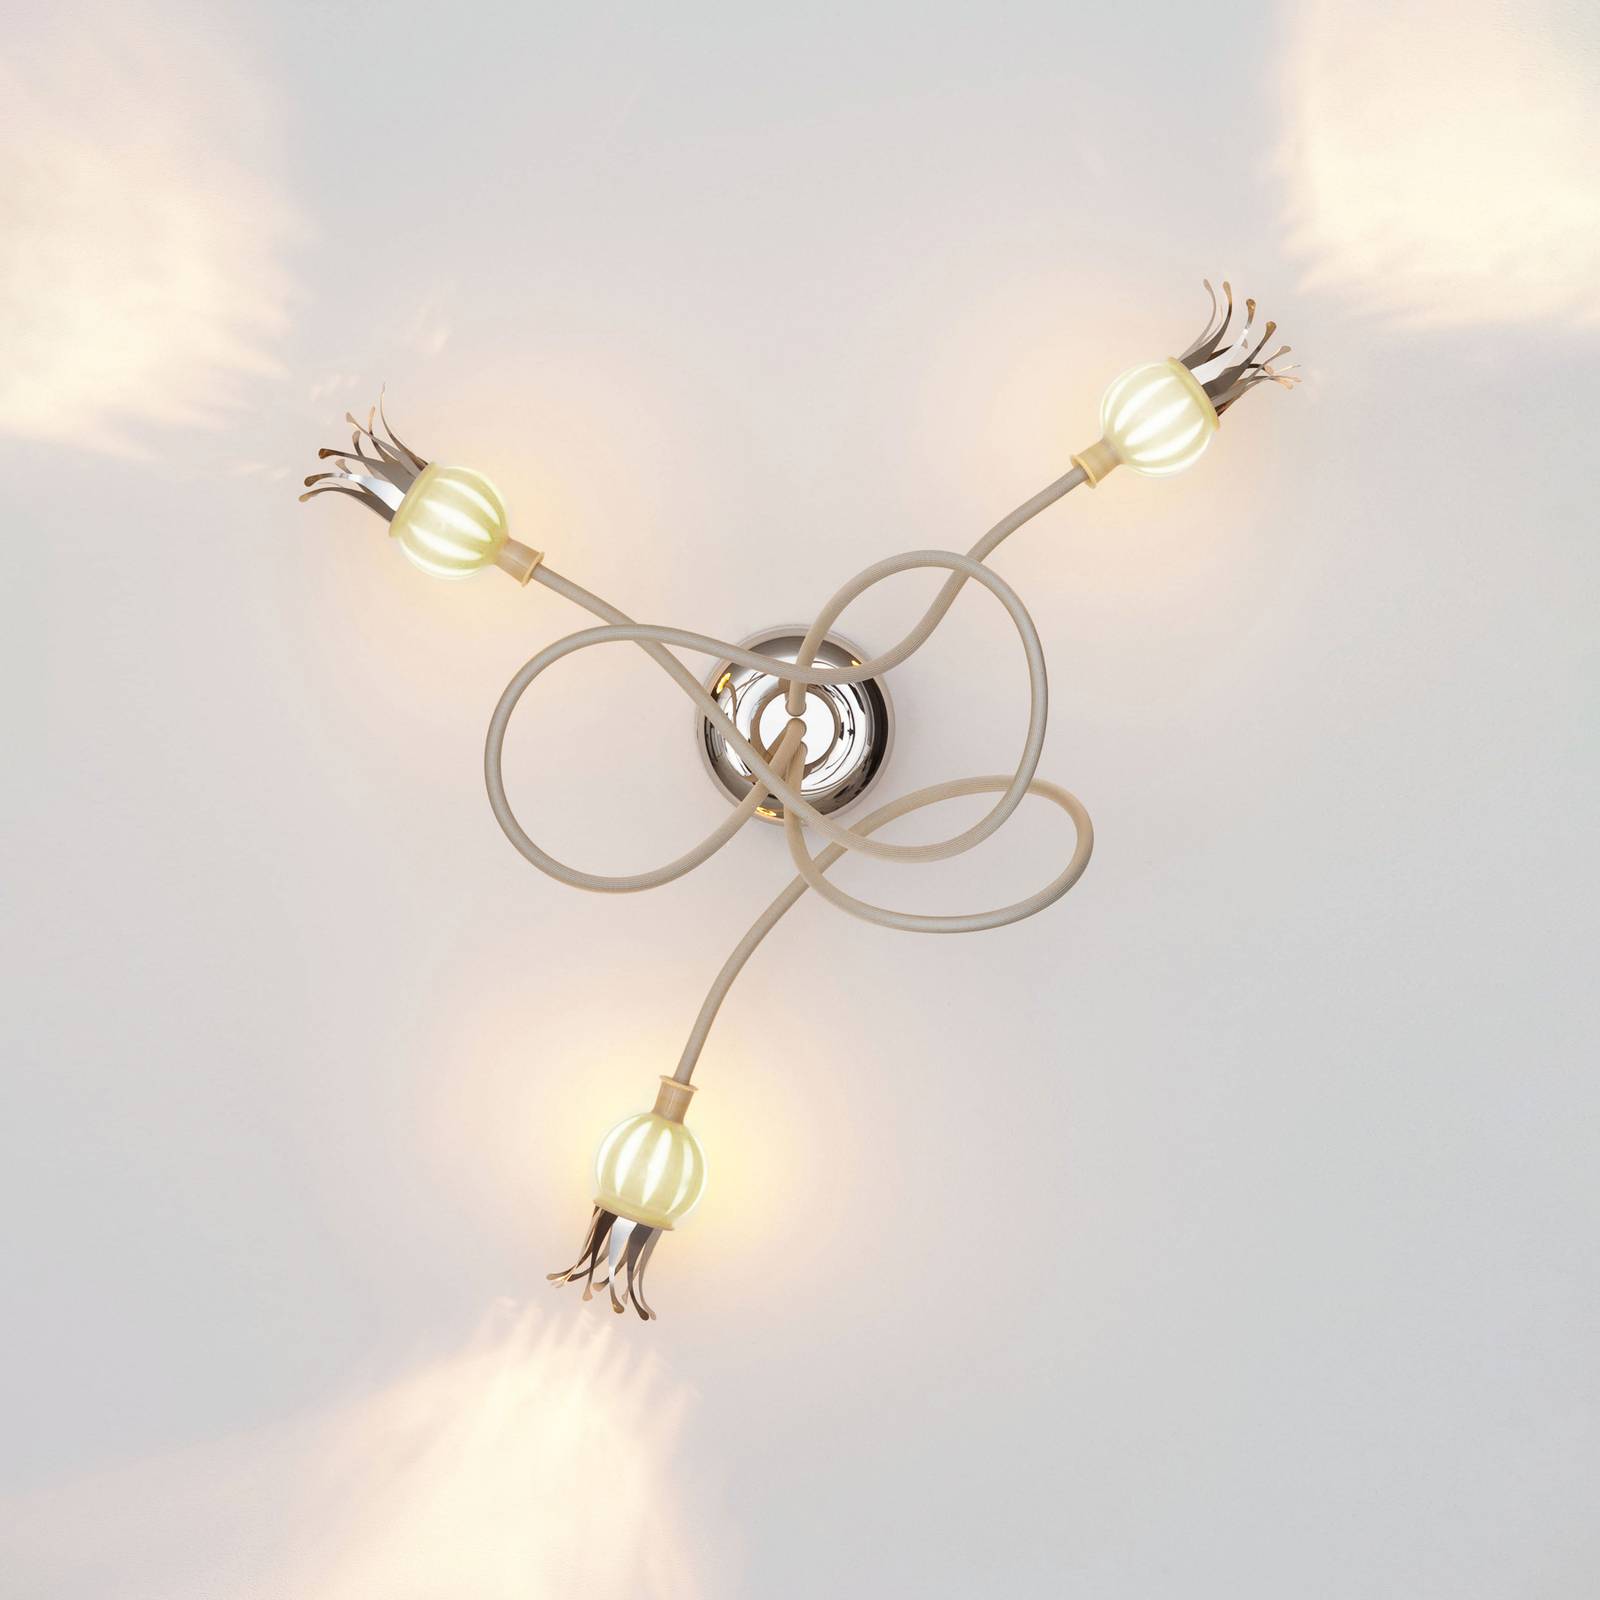 Image of Serien Lighting serien.lighting Plafond Poppy, 3 lampes beige/céramique 4260331390065